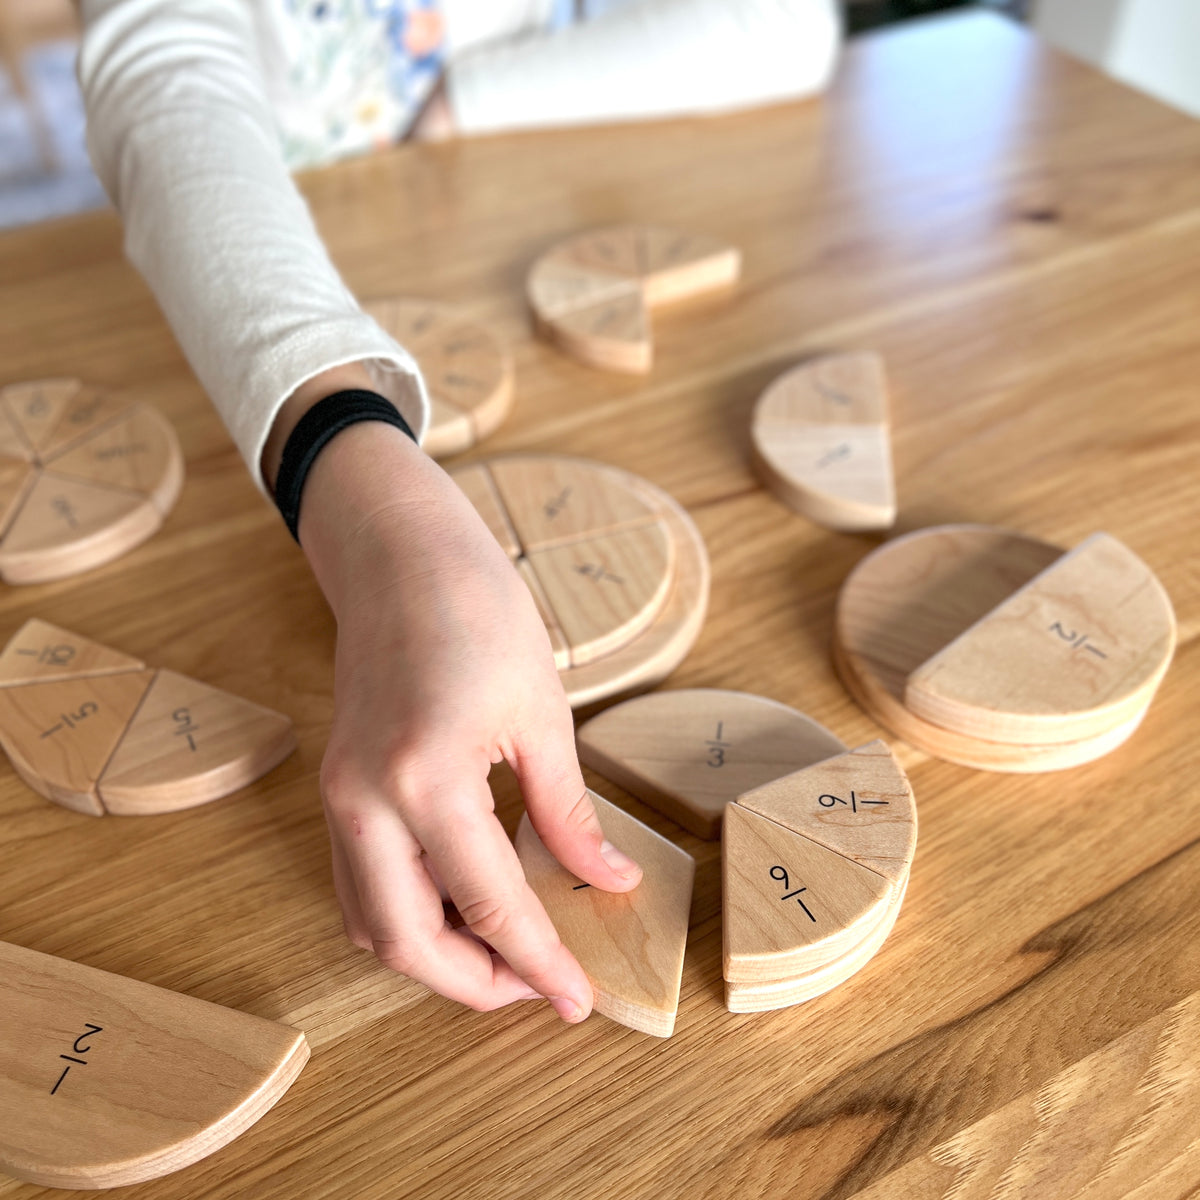 QTY 1 Wooden Circles, Various Sizes, Circle Cutouts, Wooden Circles, Wood  Disc, Wood Coins, Maple Wood Circles, Small Circles, Kids Craft -   Denmark